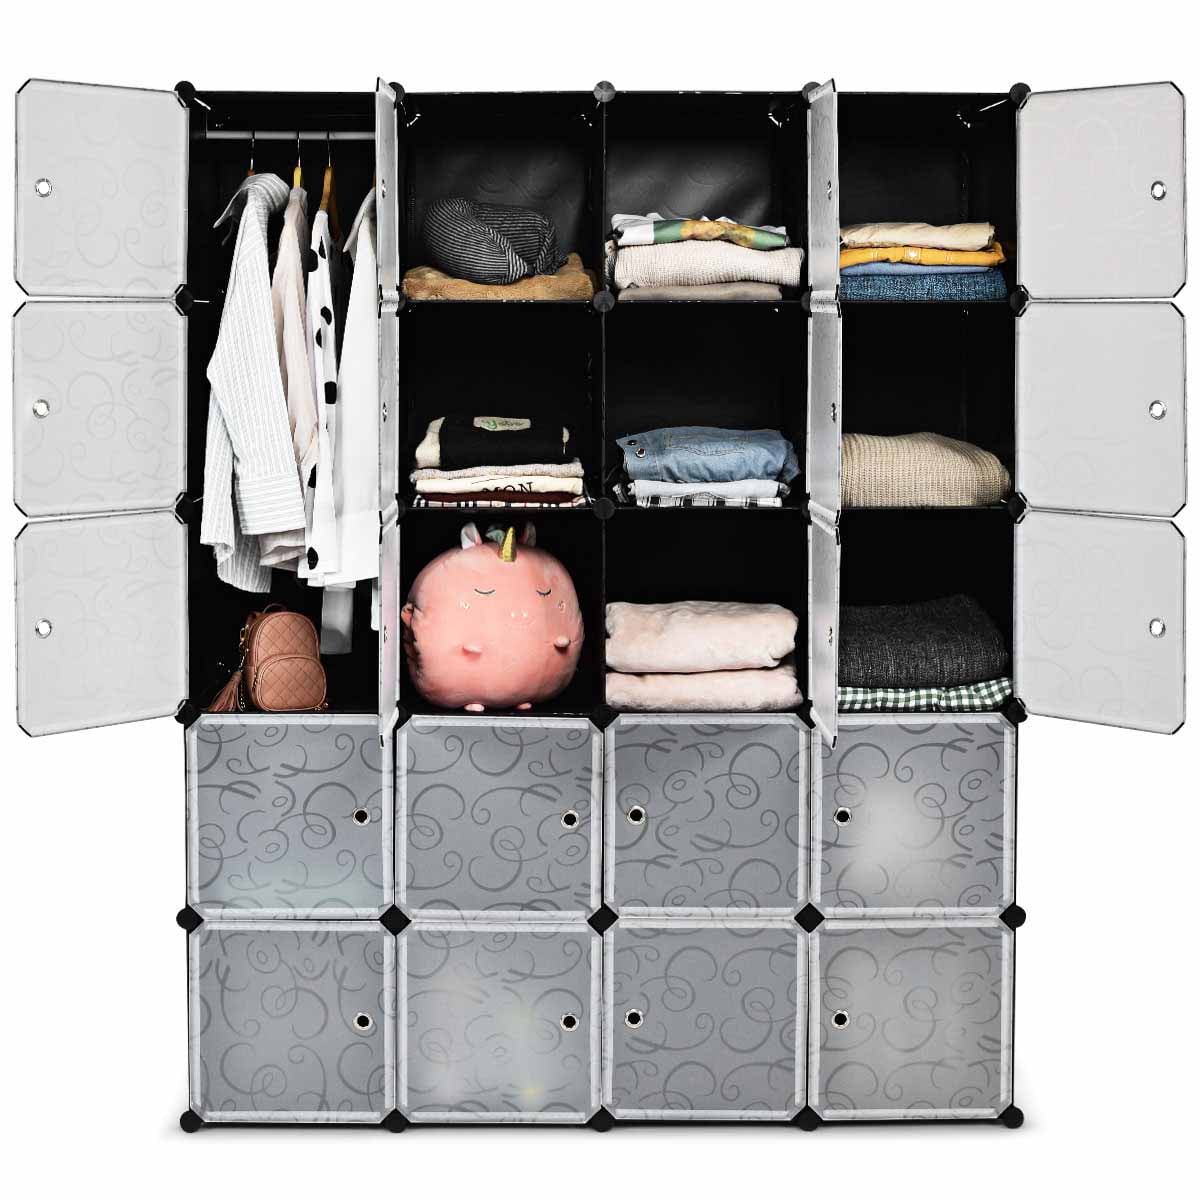 Topbuy 20 Cube Clothes Organizer Storage Cubes Portable